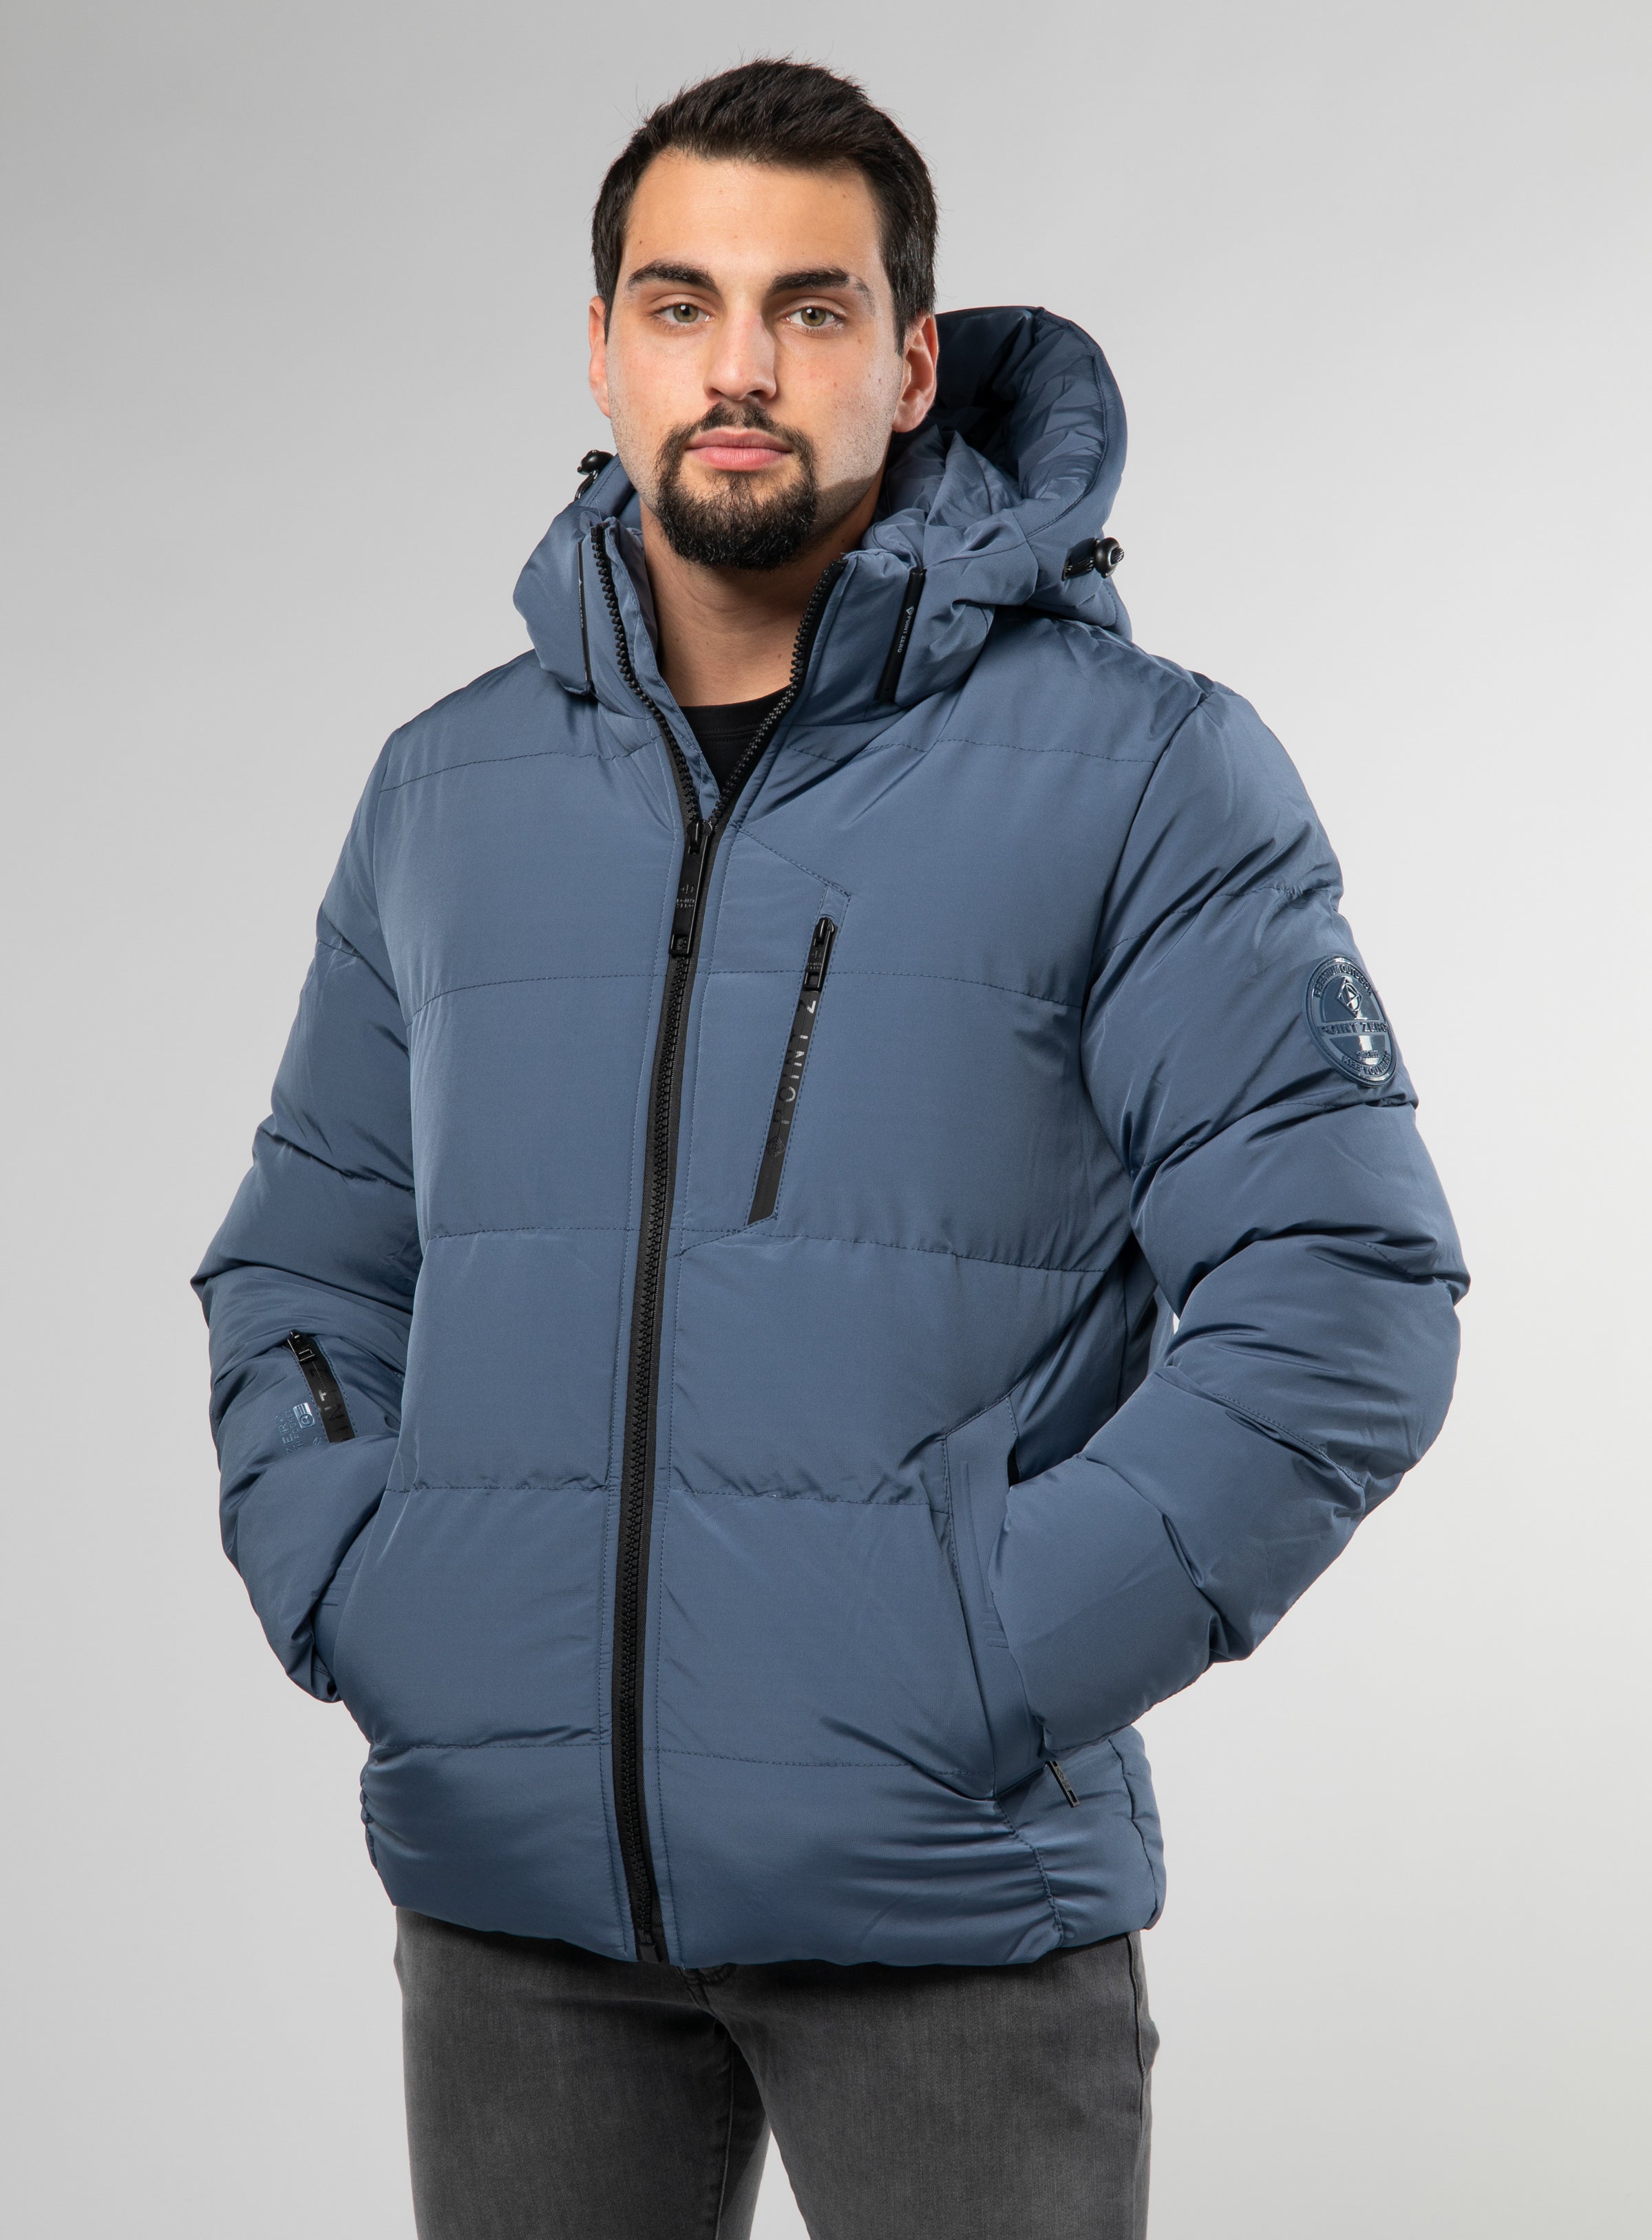 Men's Fall/Winter Mid-Season Coats & Outerwear - Ernest